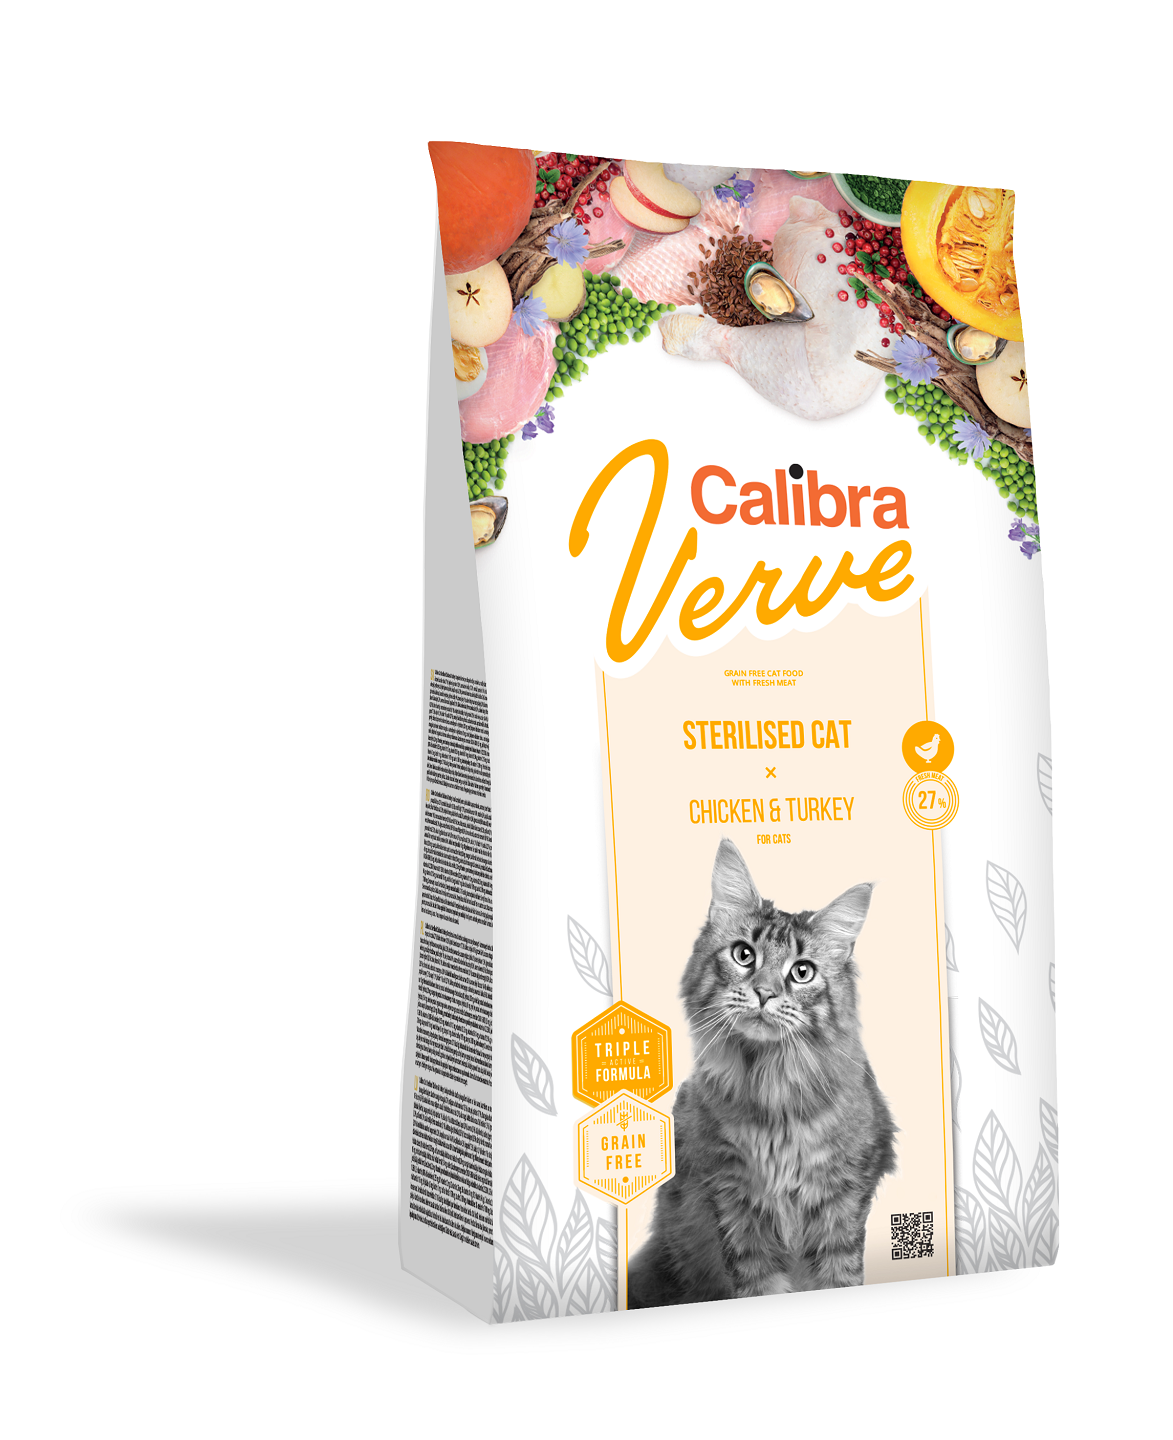 Calibra Cat Verve Grain Free Sterilised, Chicken & Turkey, 750 g Calibra